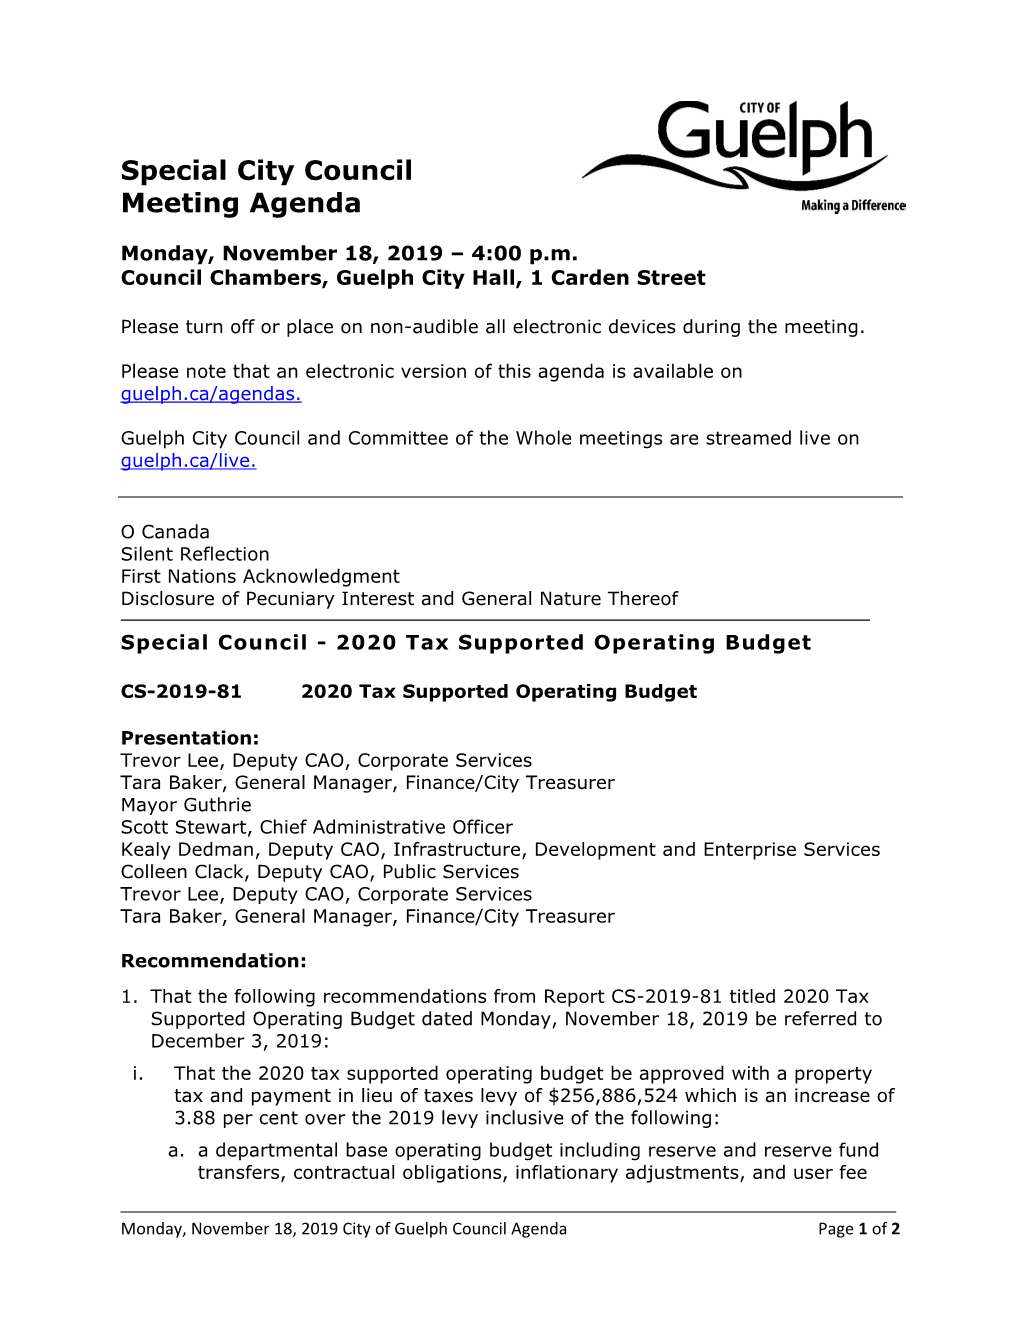 Special City Council Meeting Agenda